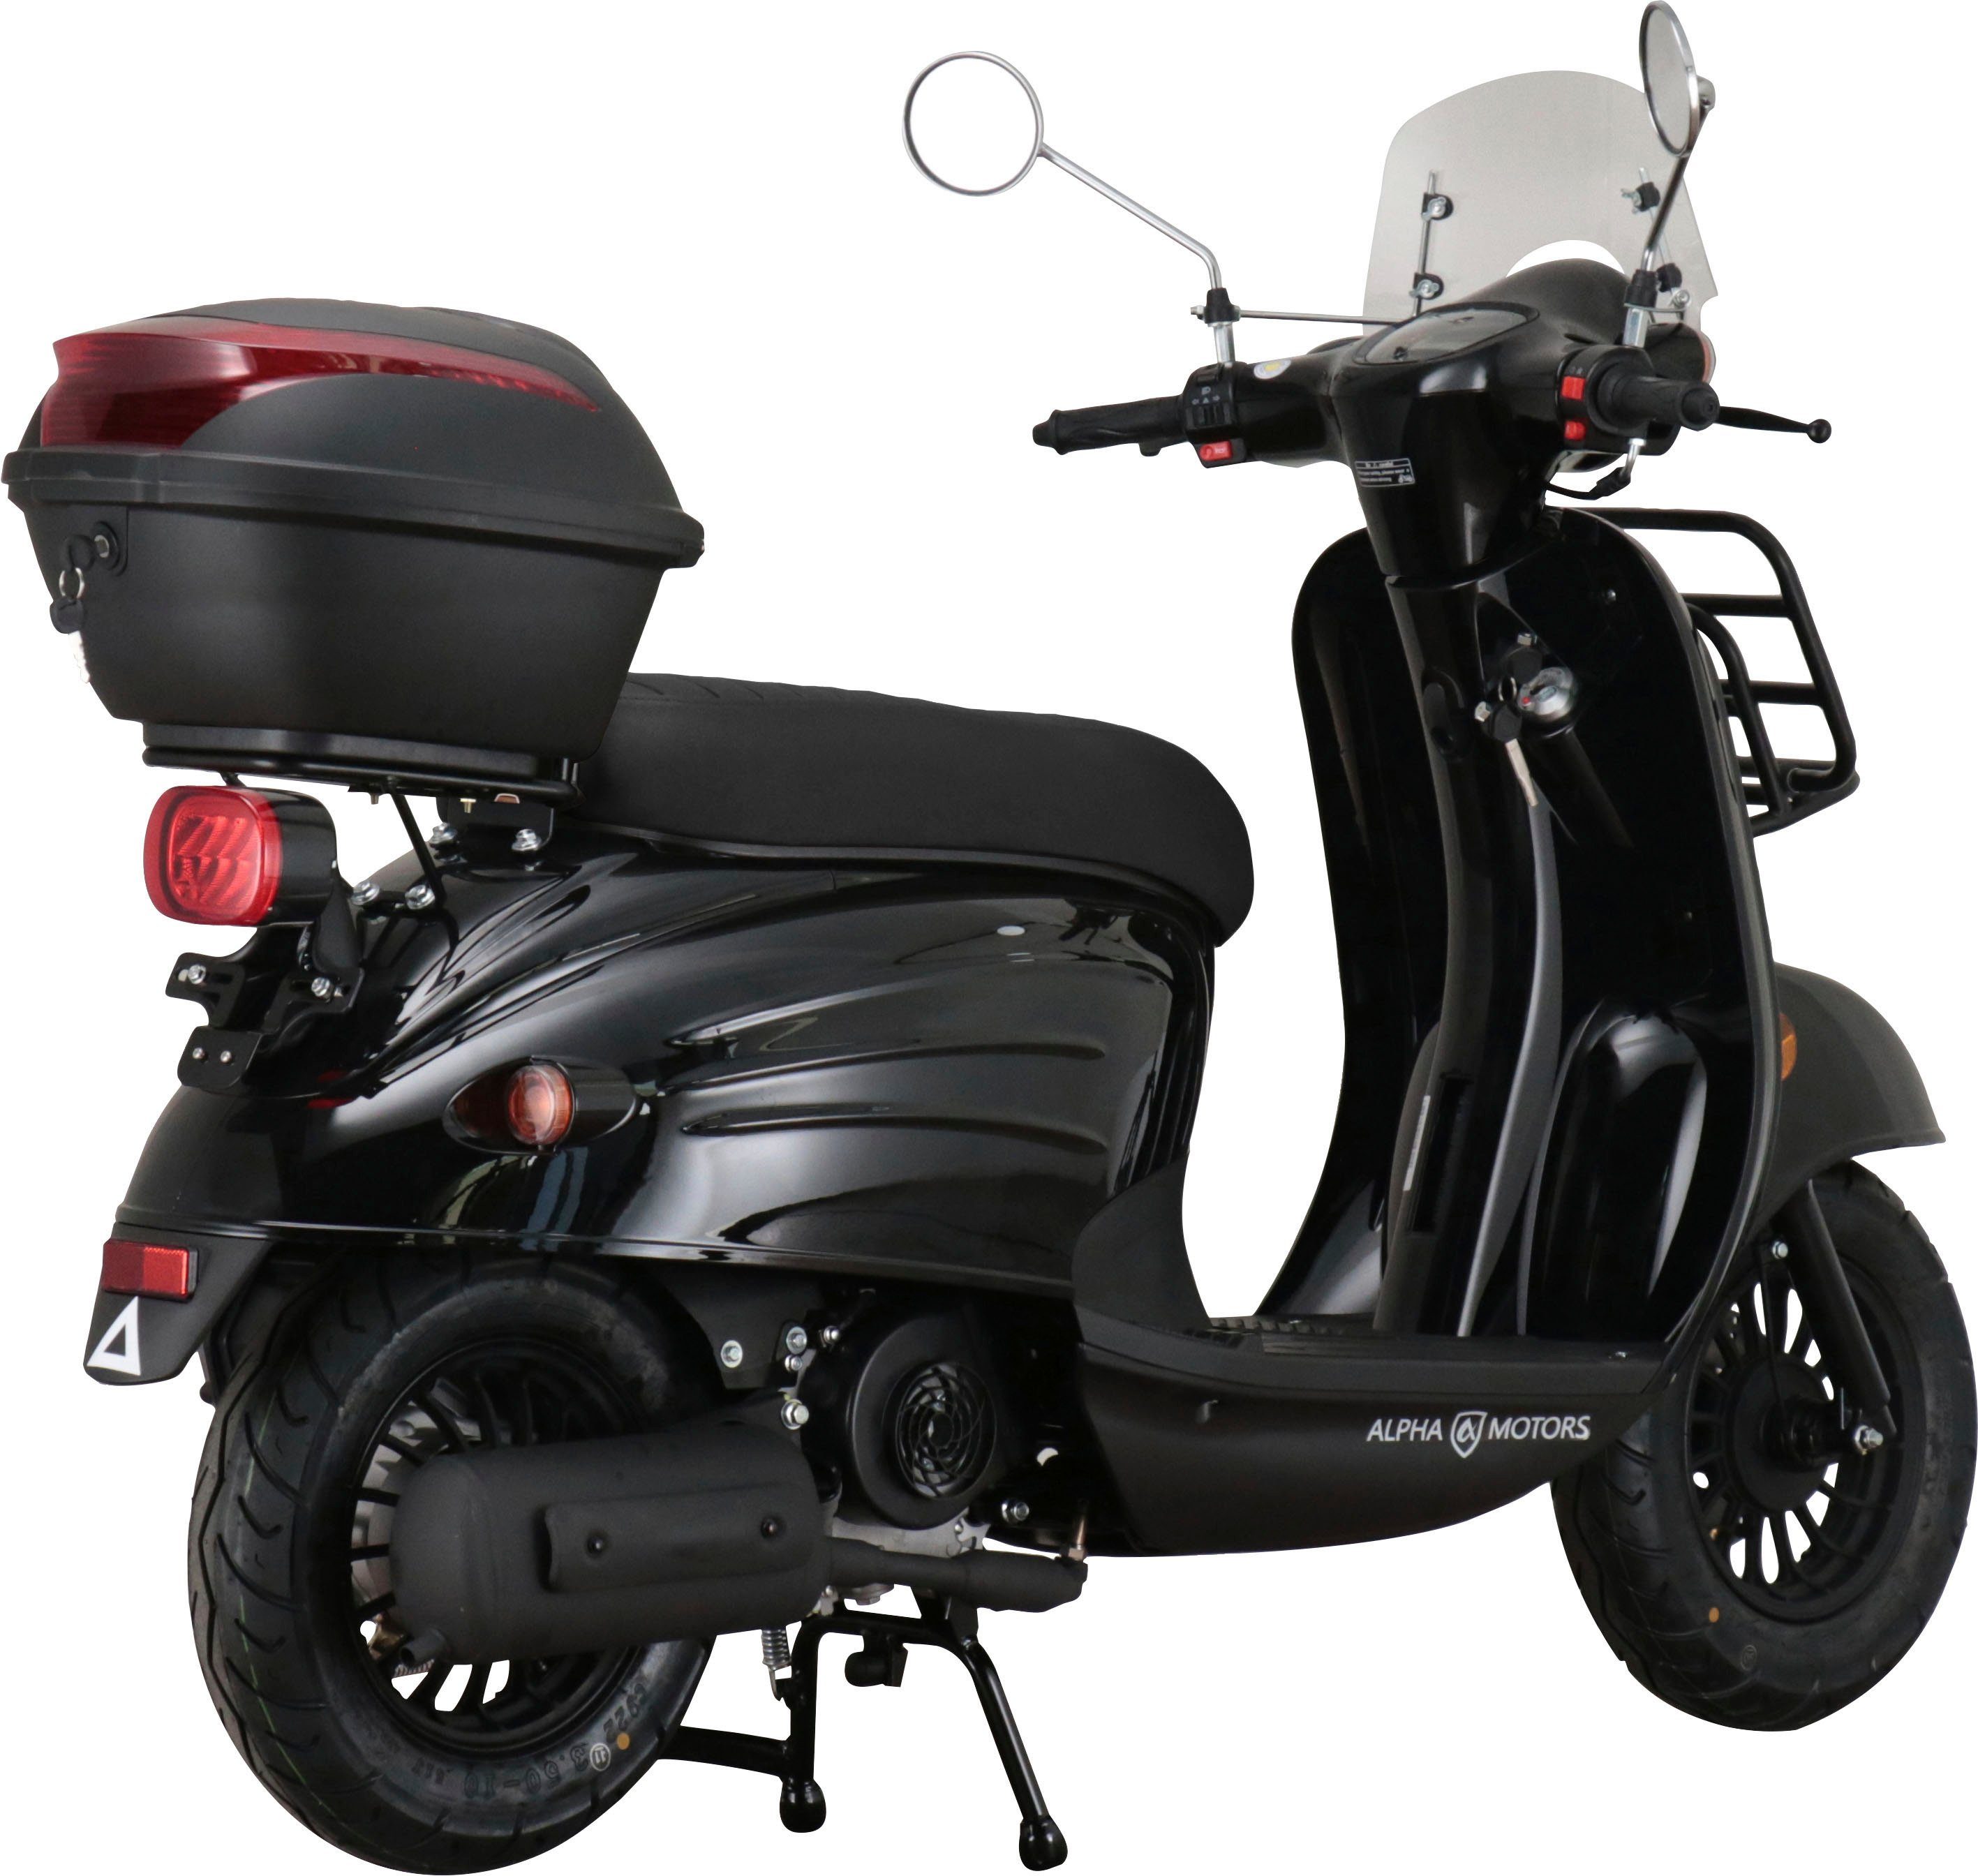 Alpha Motors Motorroller inkl. km/h, ccm, 45 50 und Adria, Topcase Euro 5, Windschild